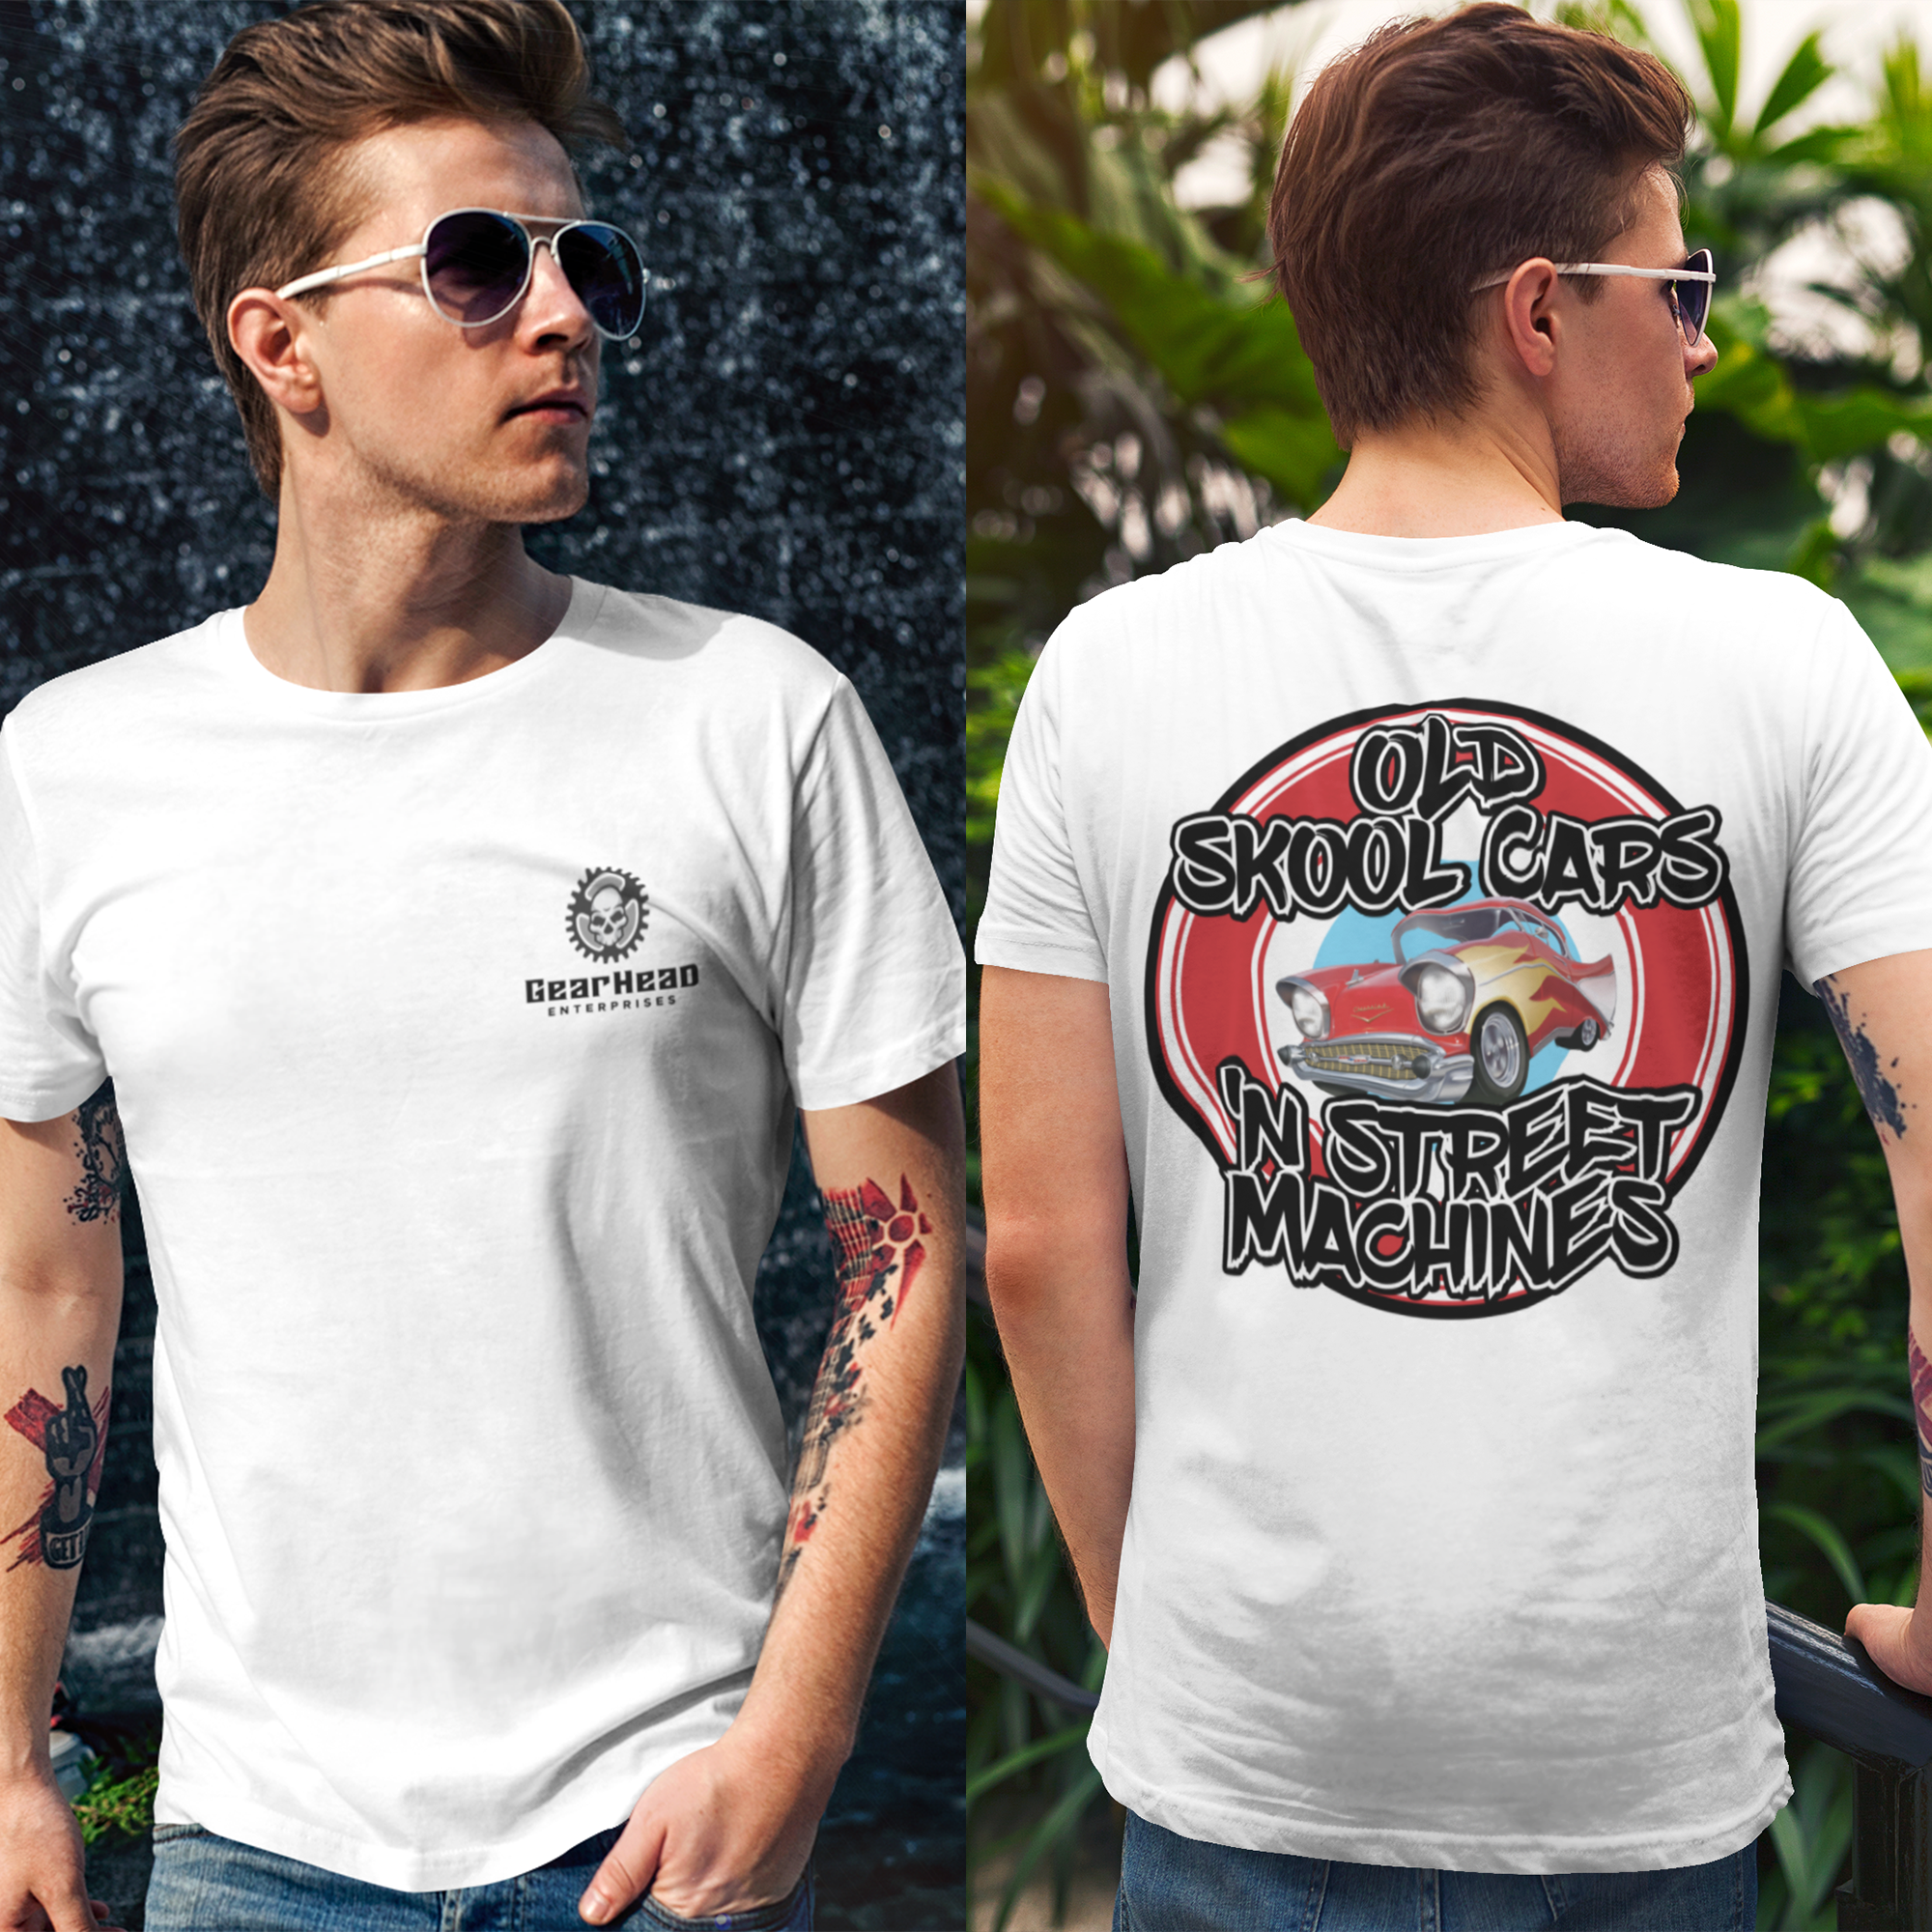 ost Metode dollar Old Skool Cars N Street Machines T-shirt -White/Gray - GearHead Enterprises